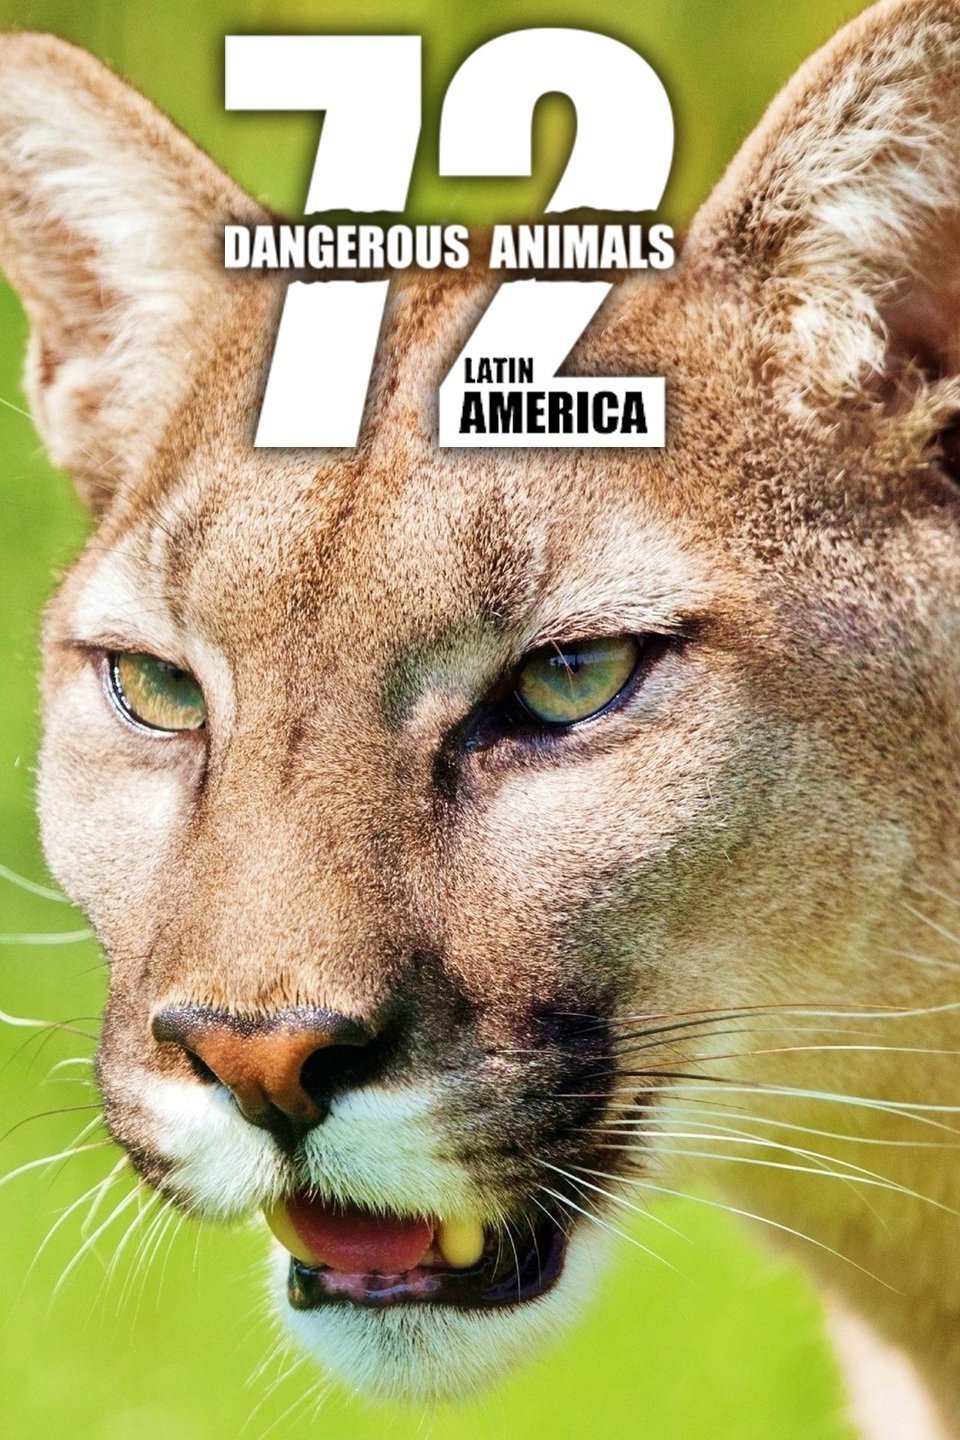 72 Dangerous Animals: Latin America - Rotten Tomatoes